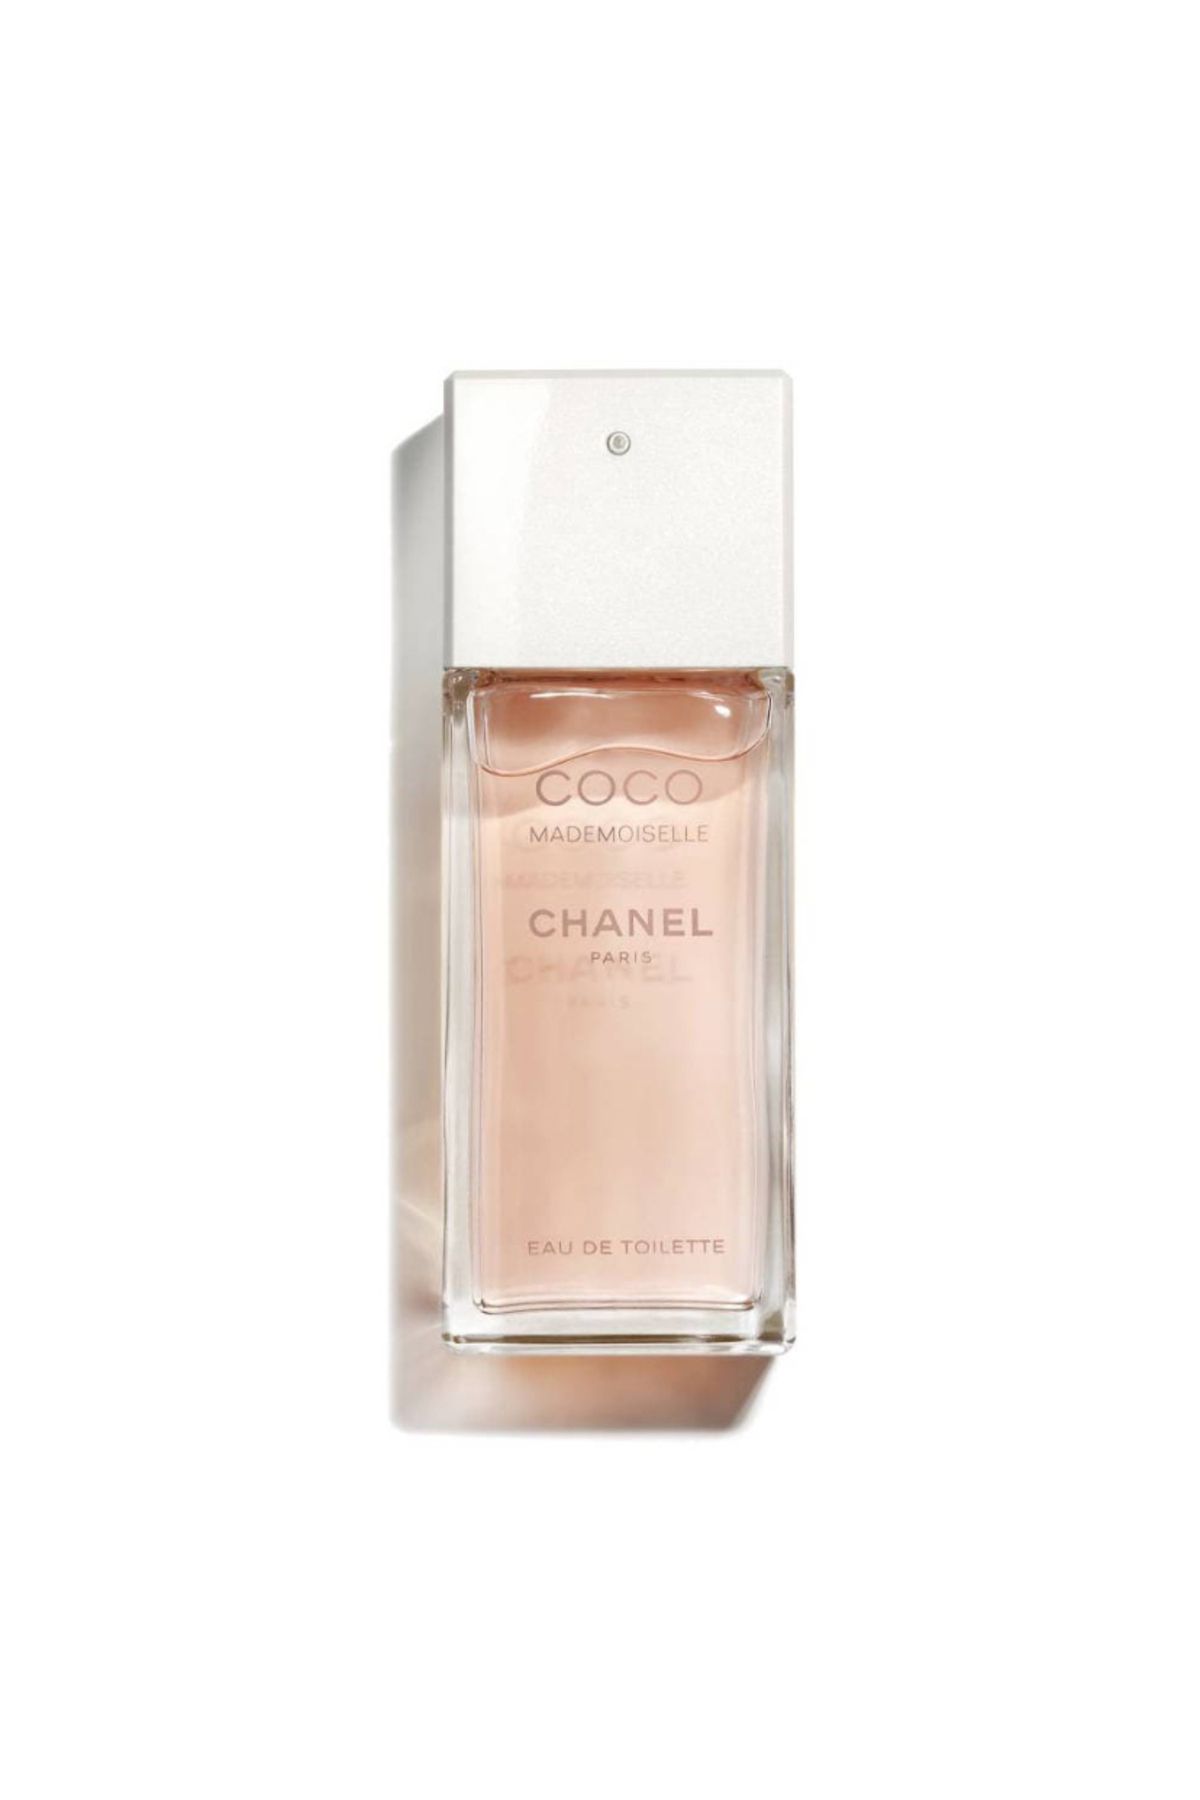 Chanel COCO MADEMOISELLE EDT PARFUM 50ml Pinkestcosmetics